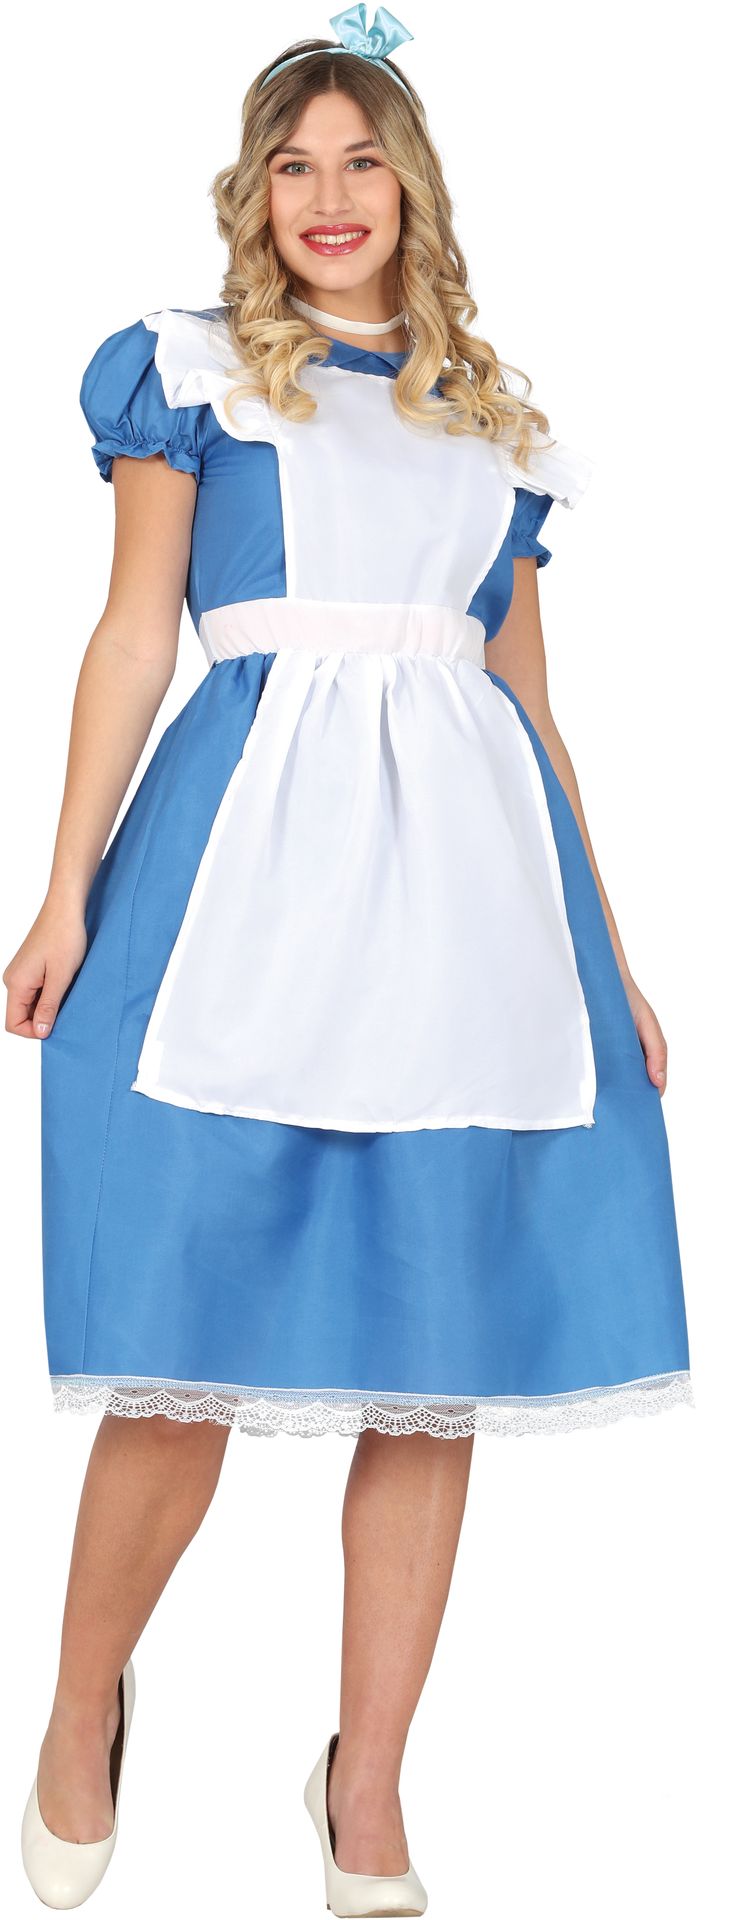 Alice in wonderland lange jurk